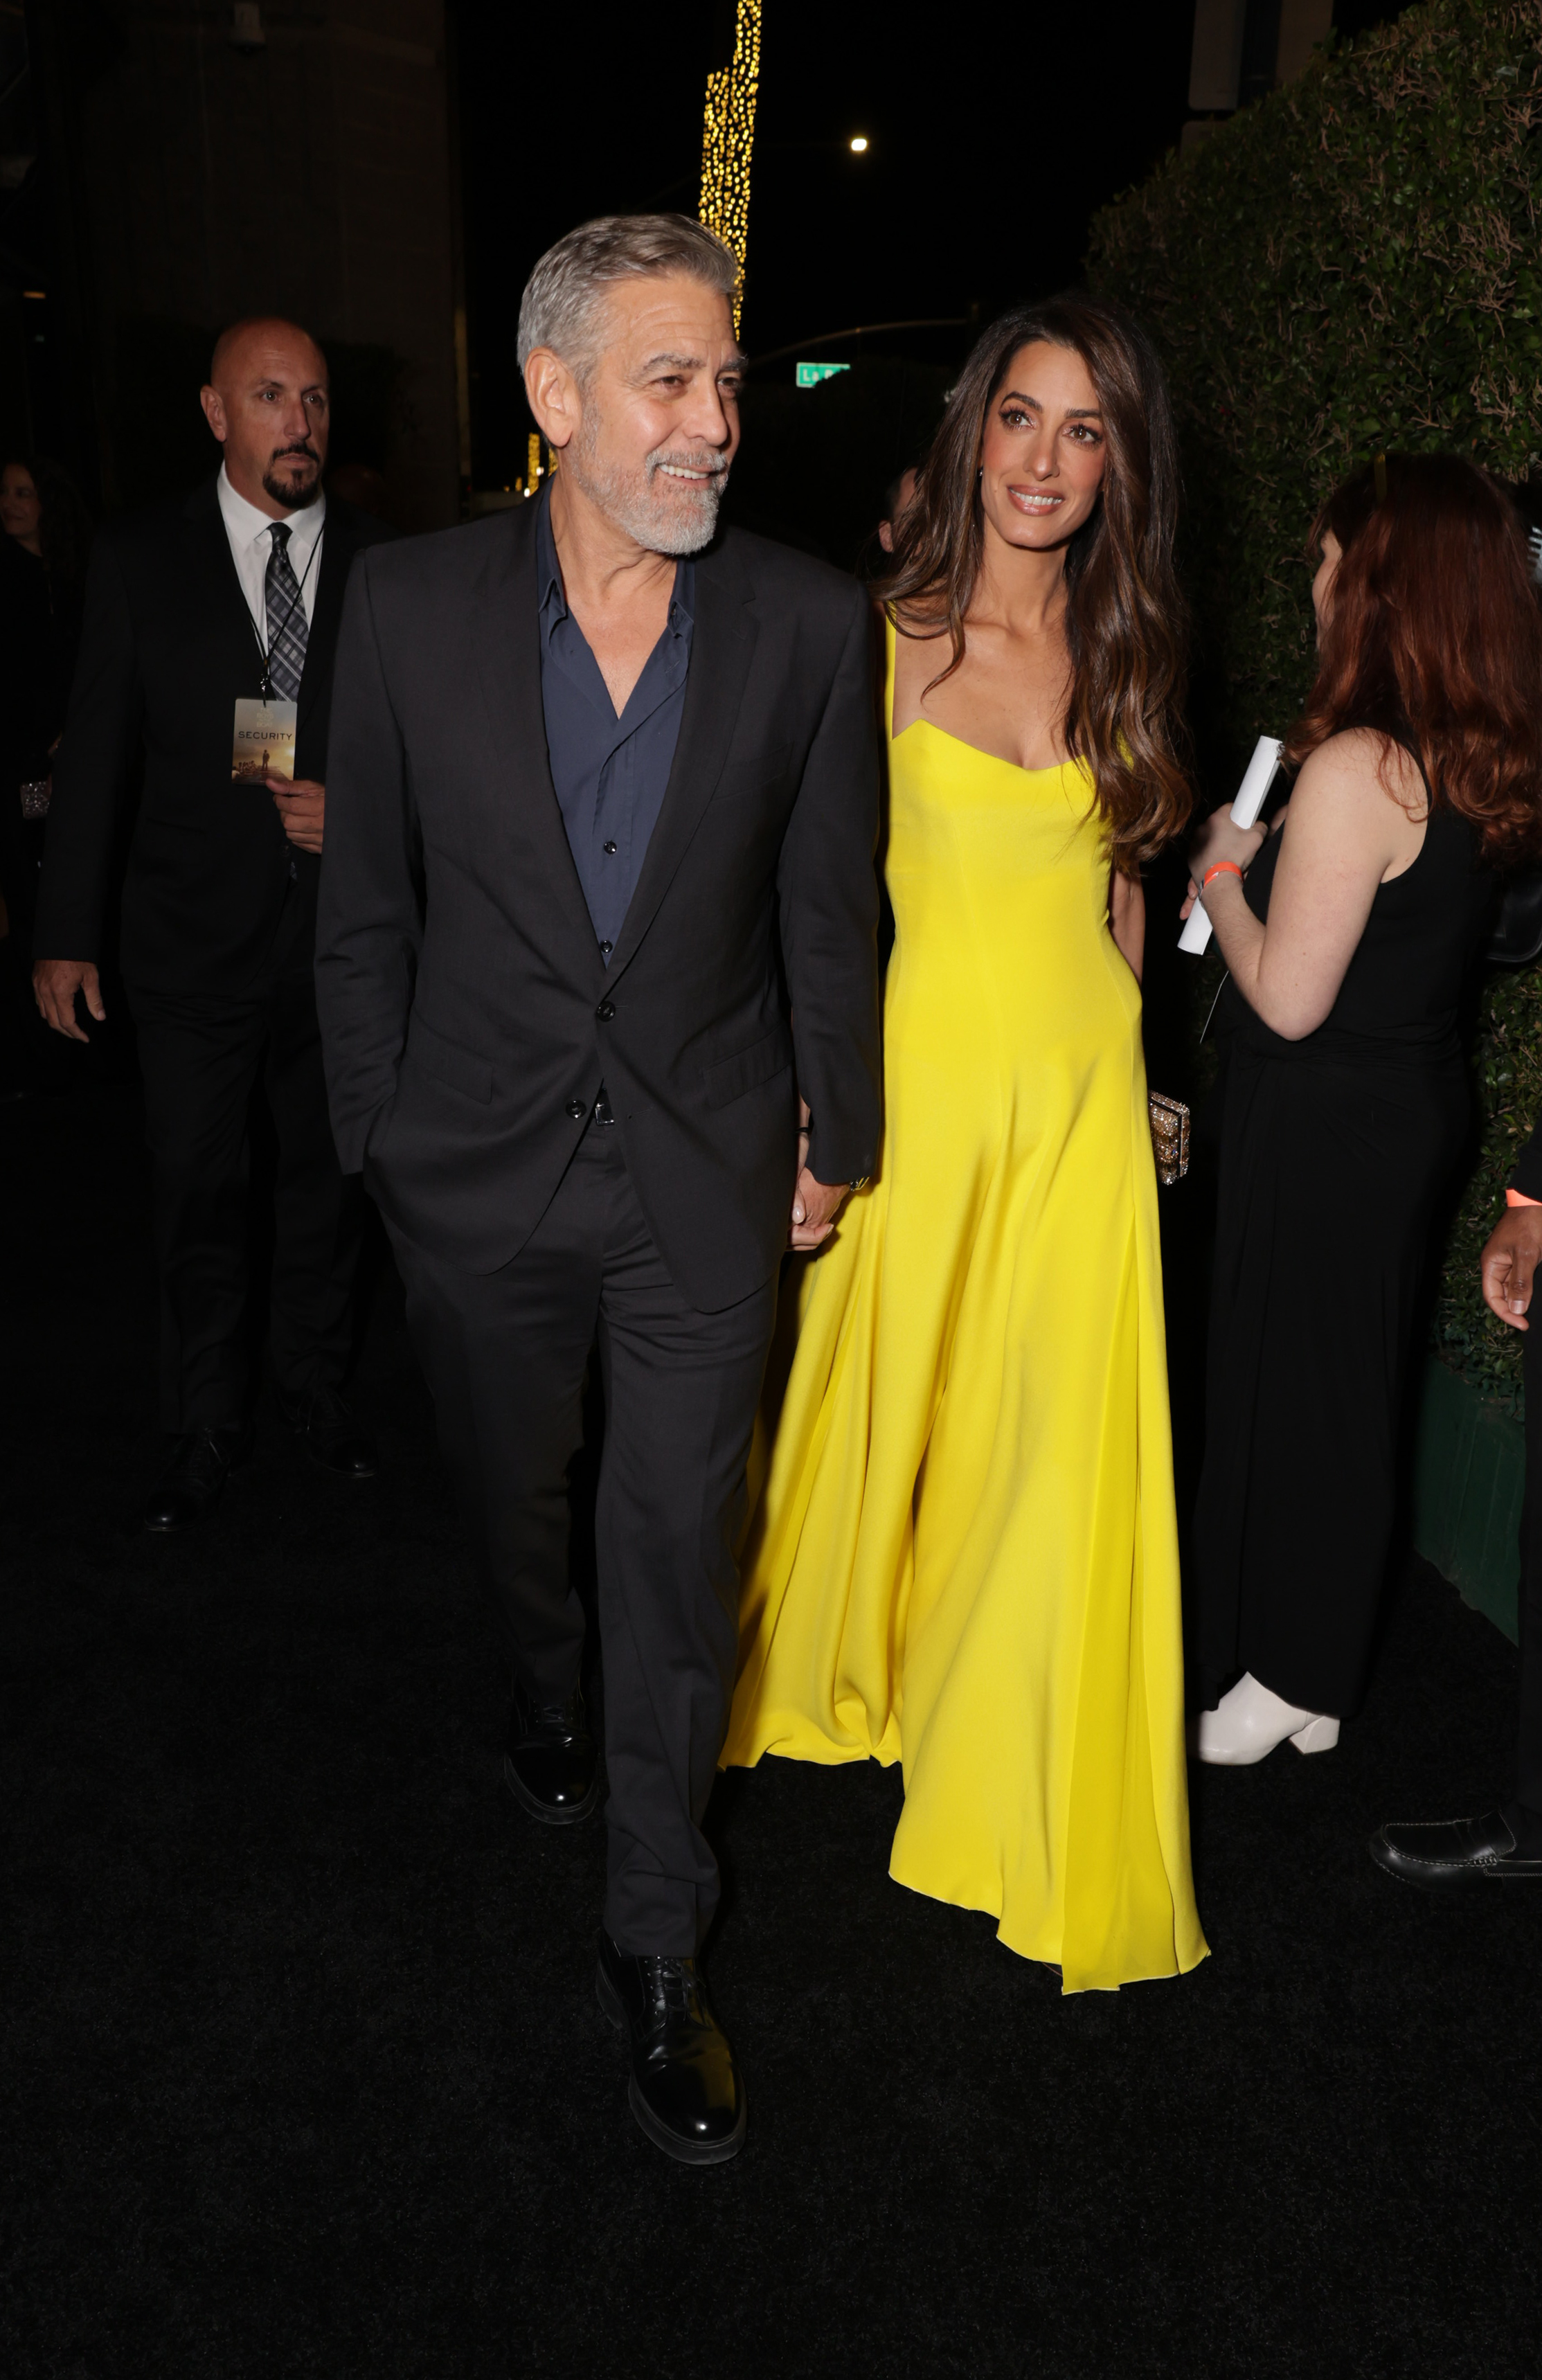 George-Amal-Clooney-Red-Carpet